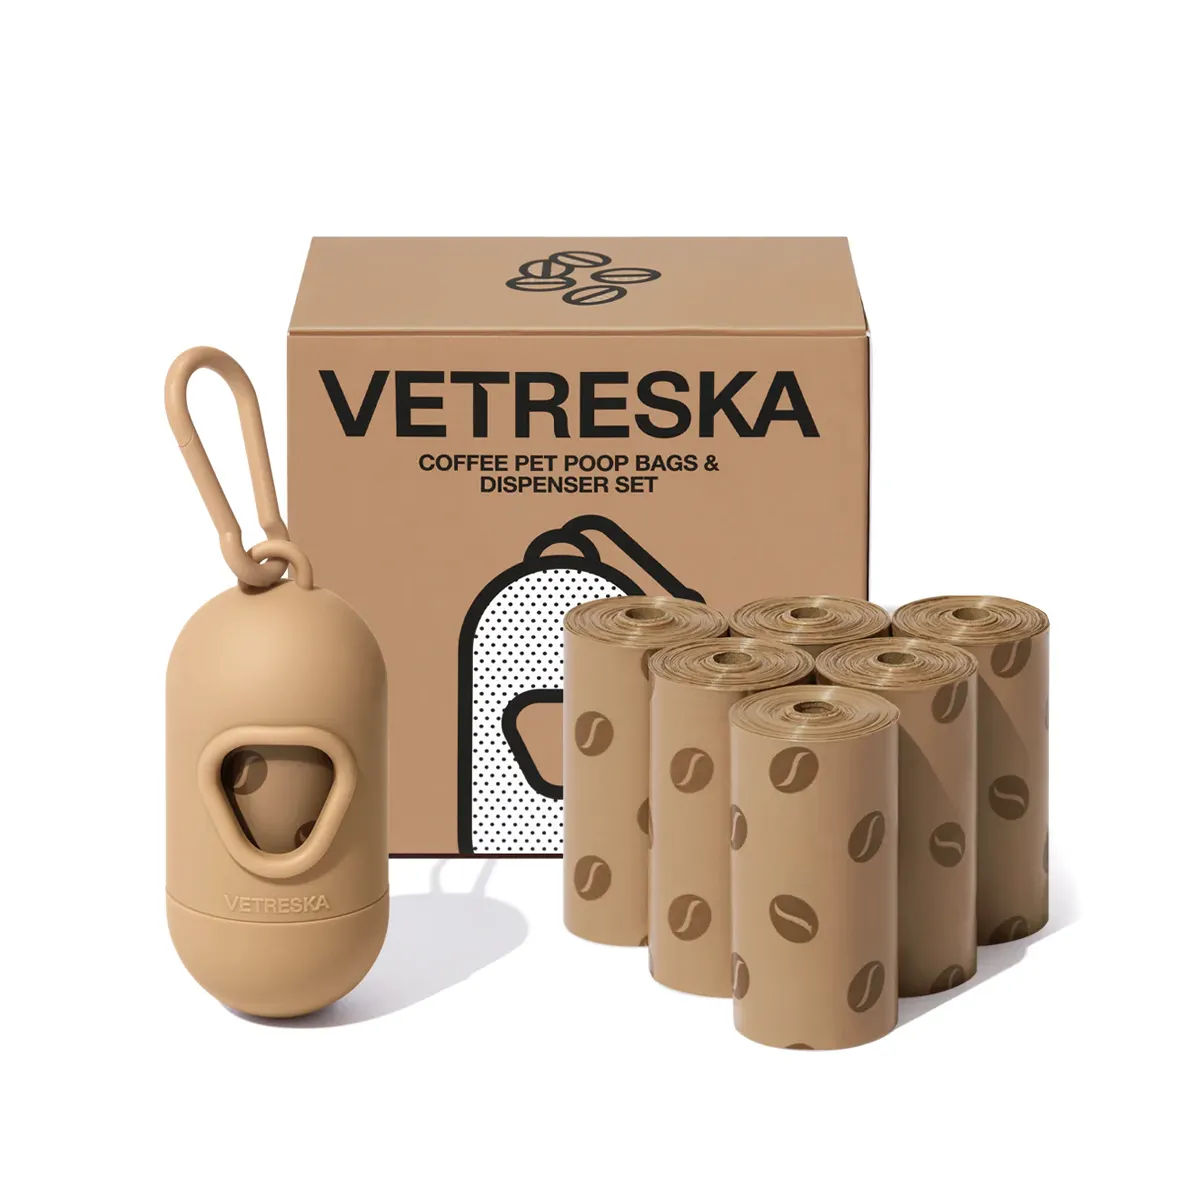 Vetreska - 咖啡味寵物便便袋及分配器套裝 (1個分配器 + 7卷便便袋)